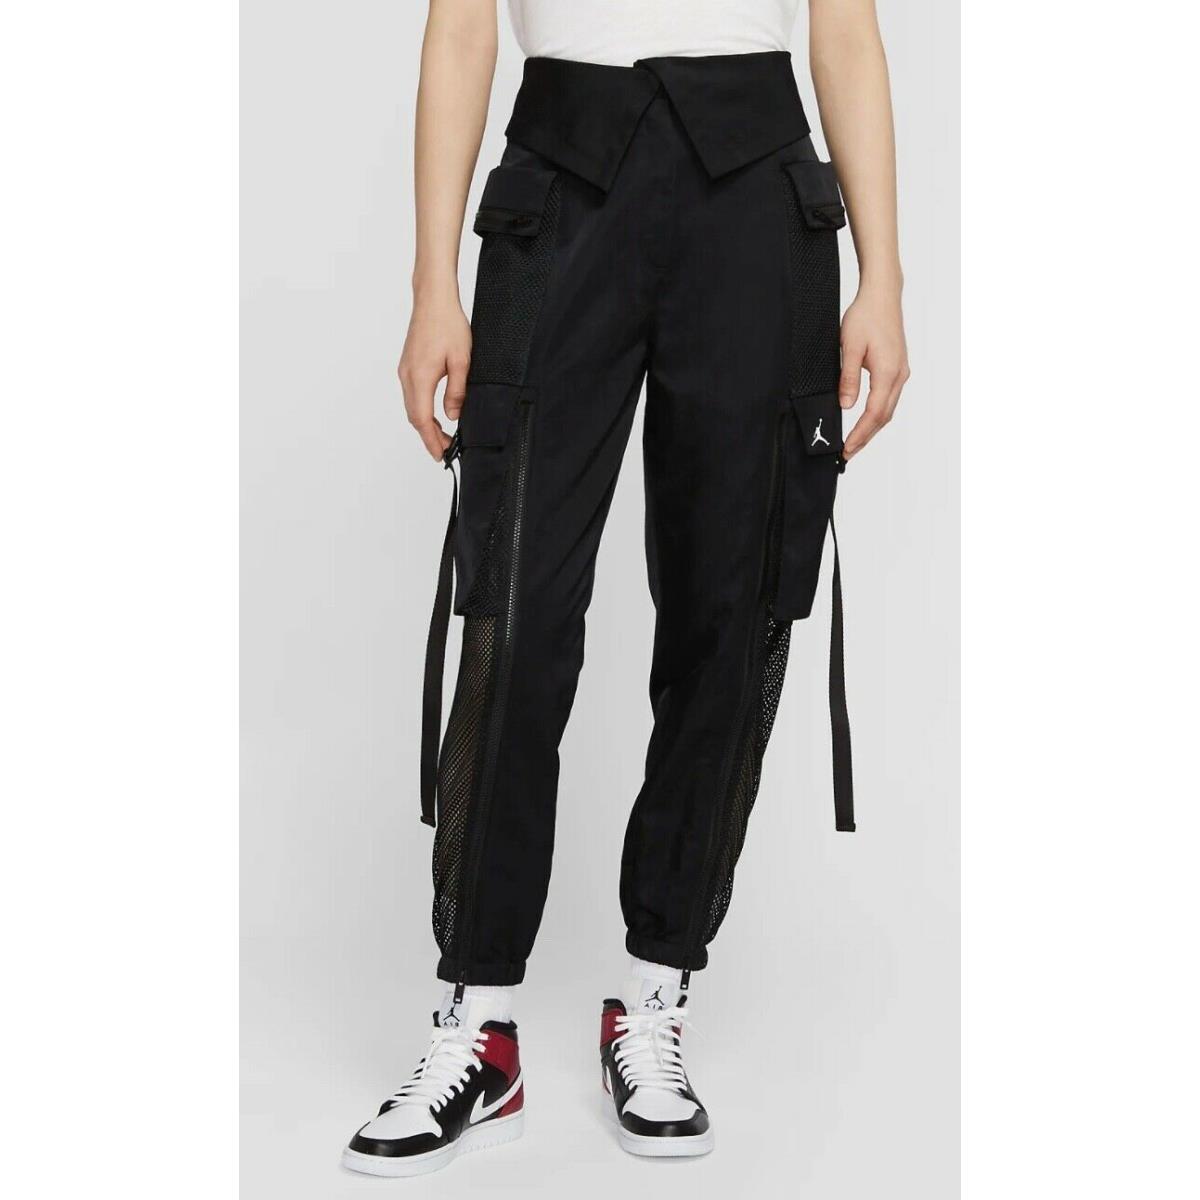 Nike Jordan Women`s Utility Pants Joggers Black CU6384 010 Sz 3X